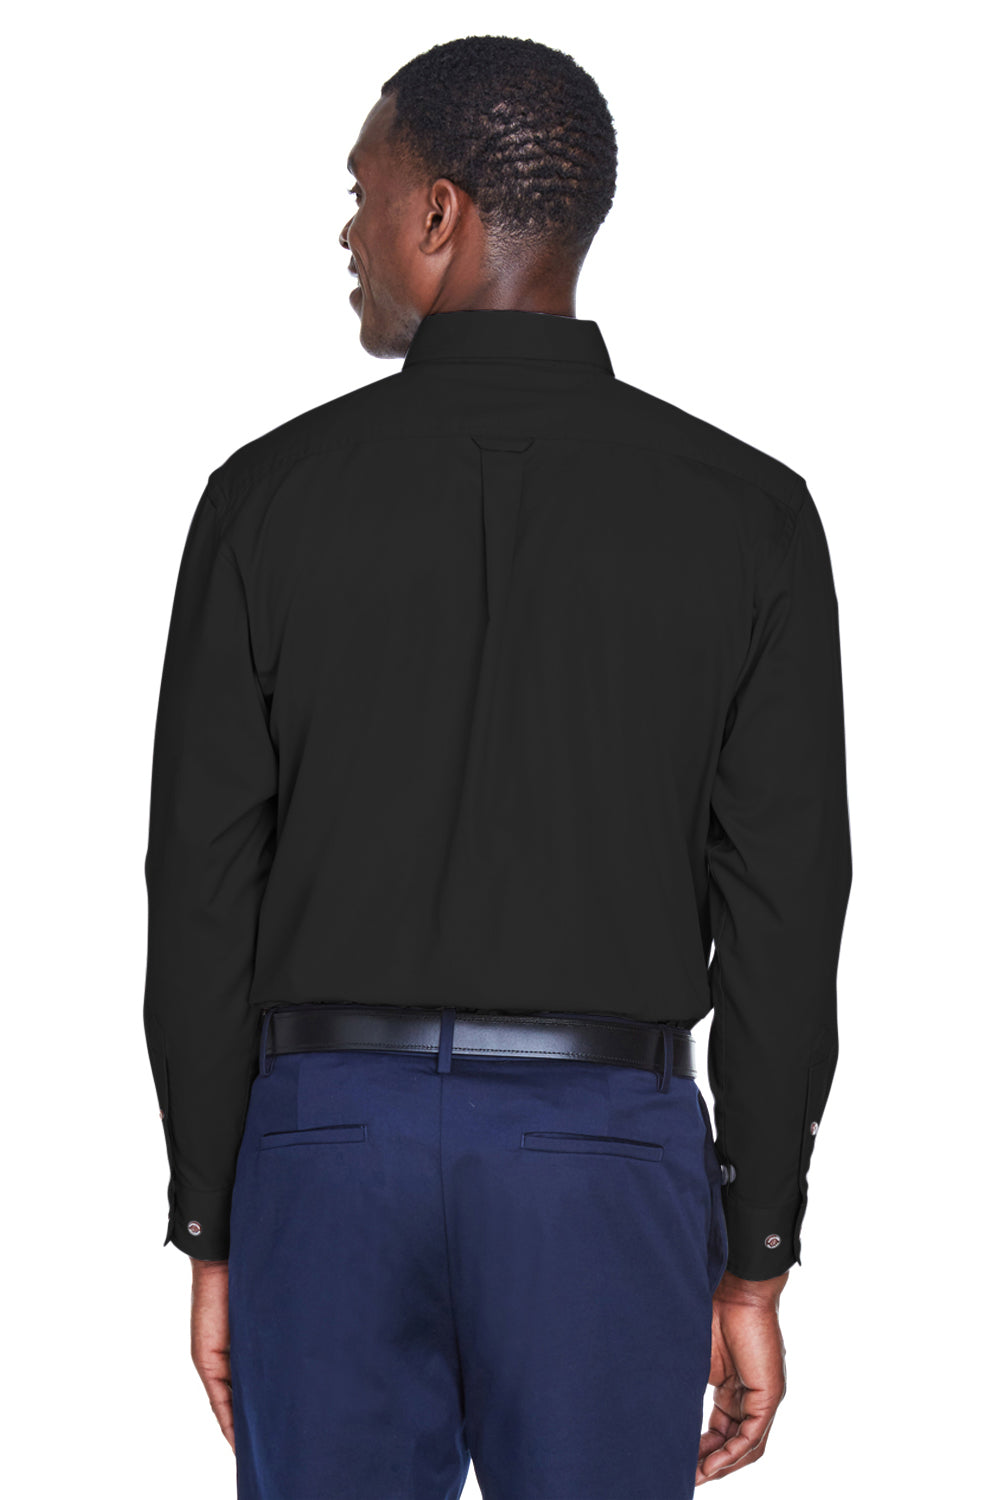 Harriton M500 Mens Wrinkle Resistant Long Sleeve Button Down Shirt w/ Pocket Black Back